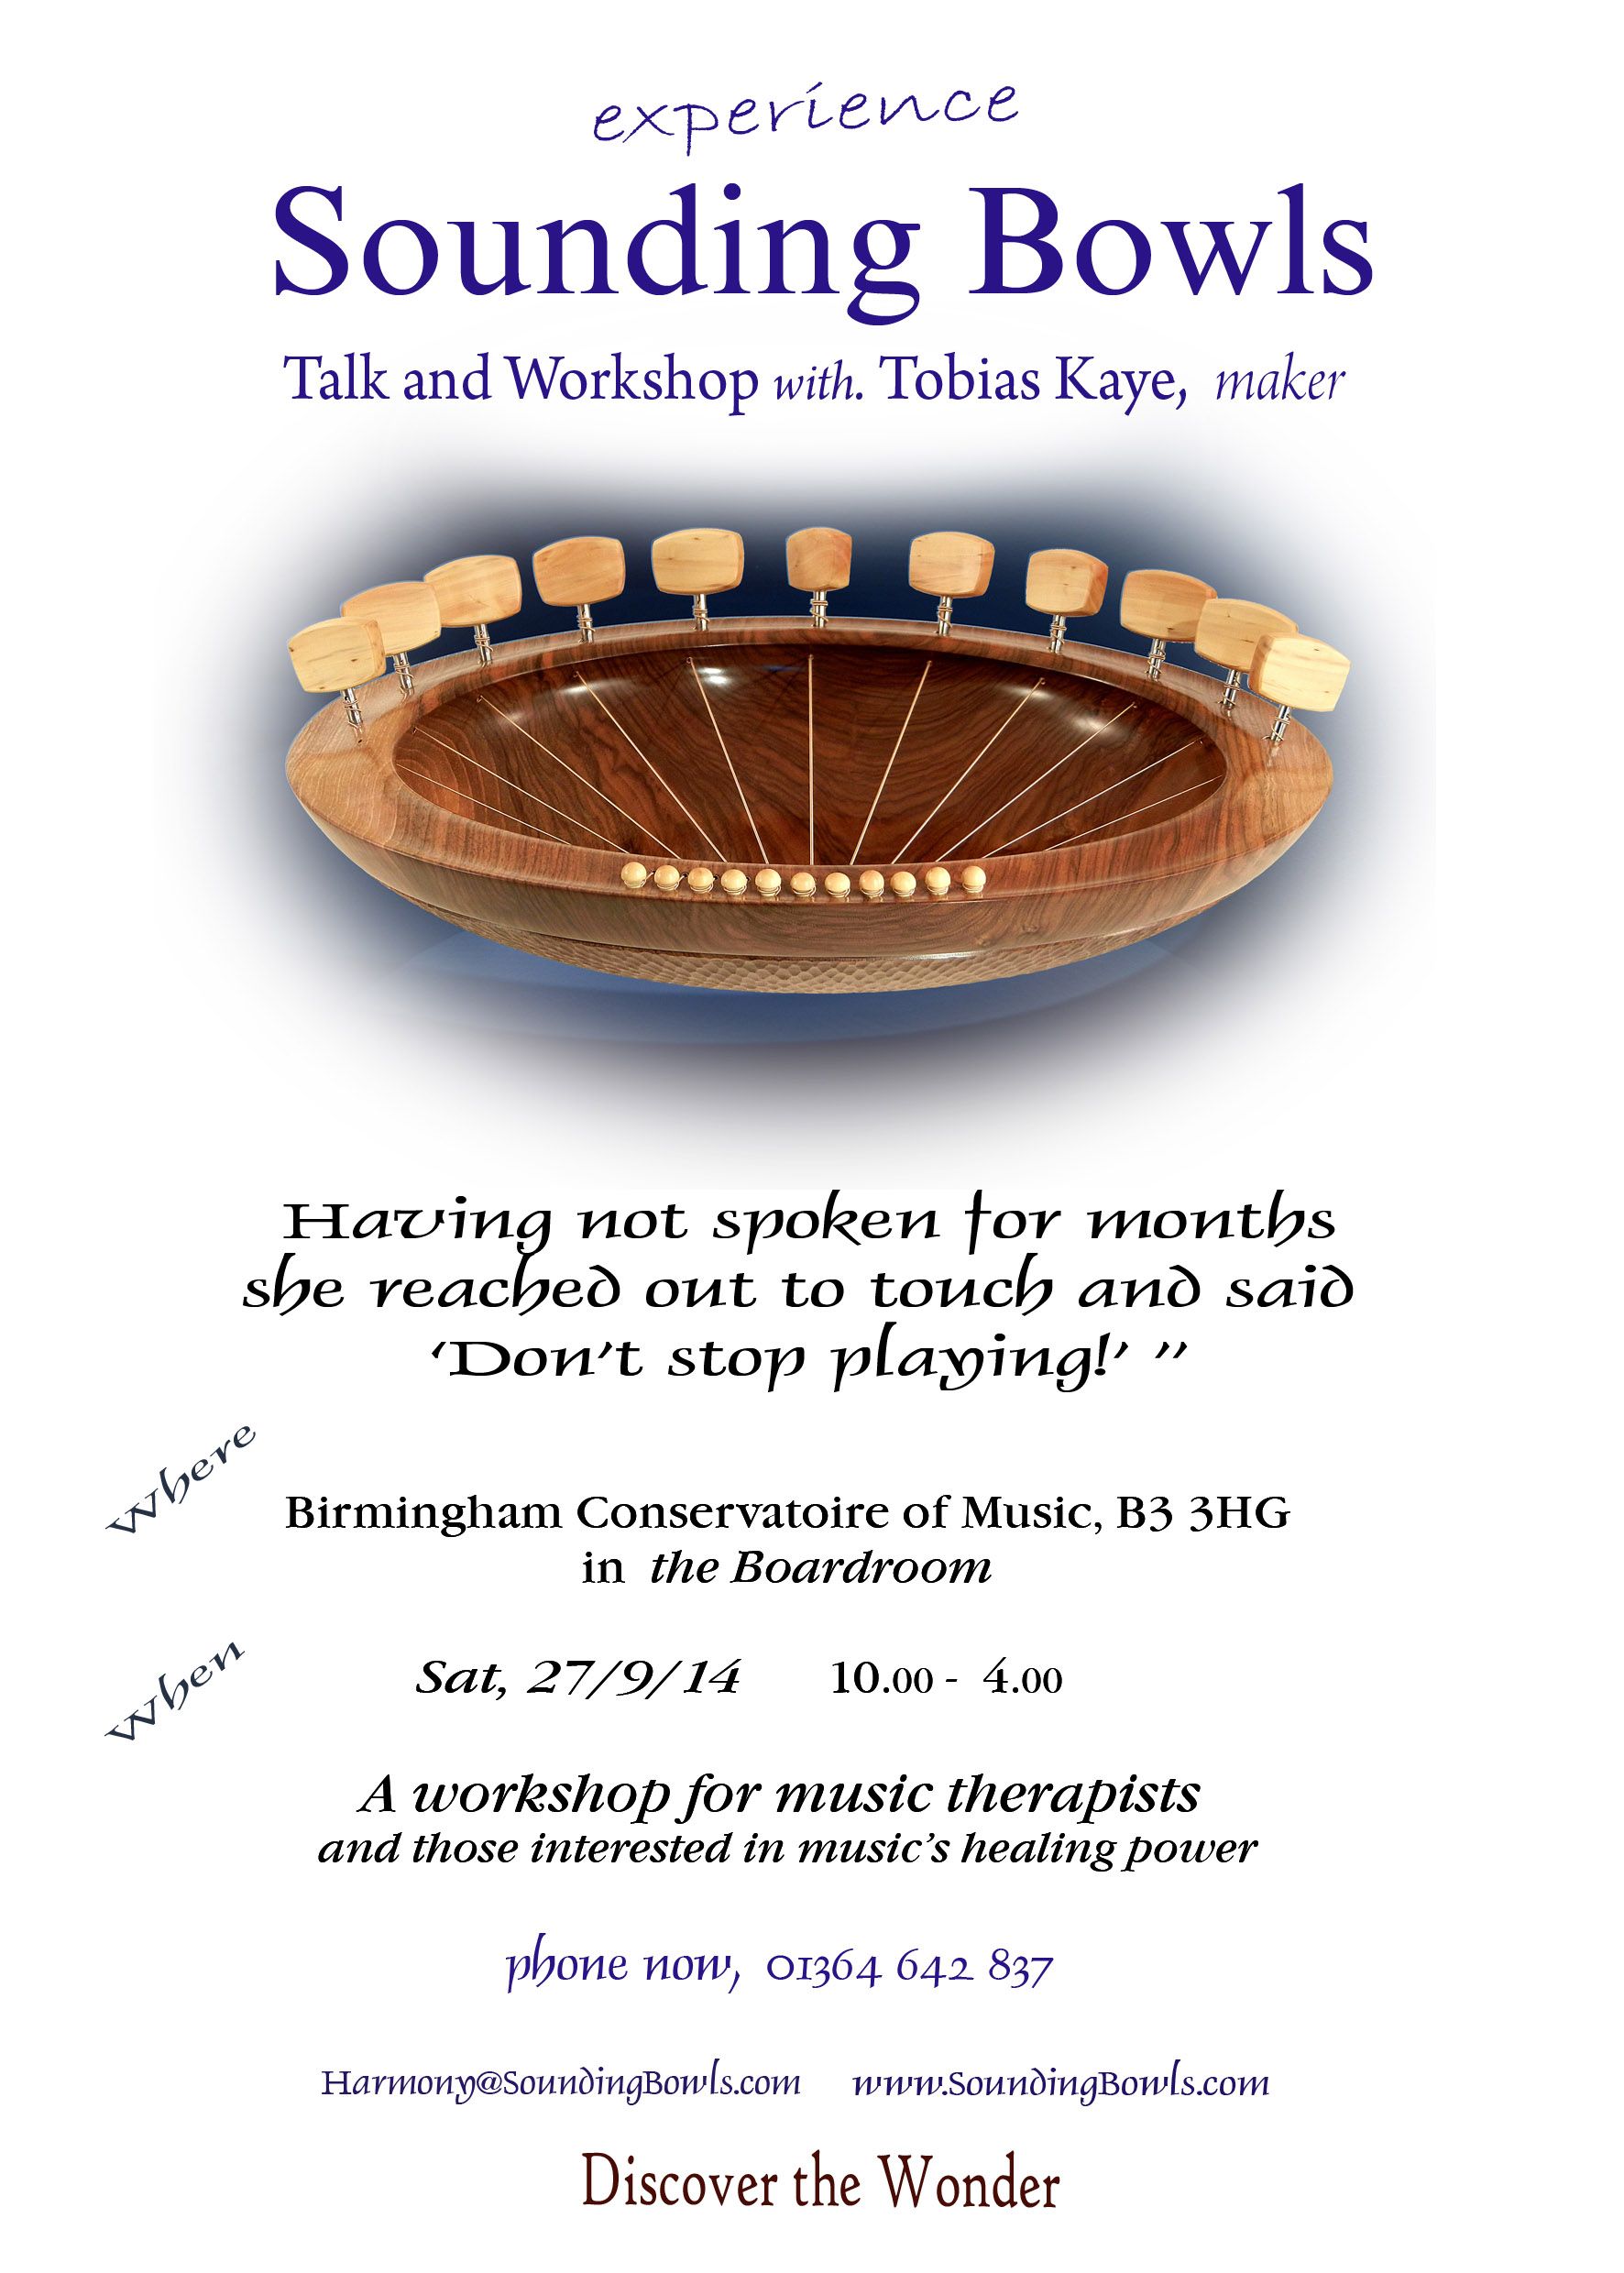 BIRMINGHAM - Sounding Bowls Workshop for Music Therapists 